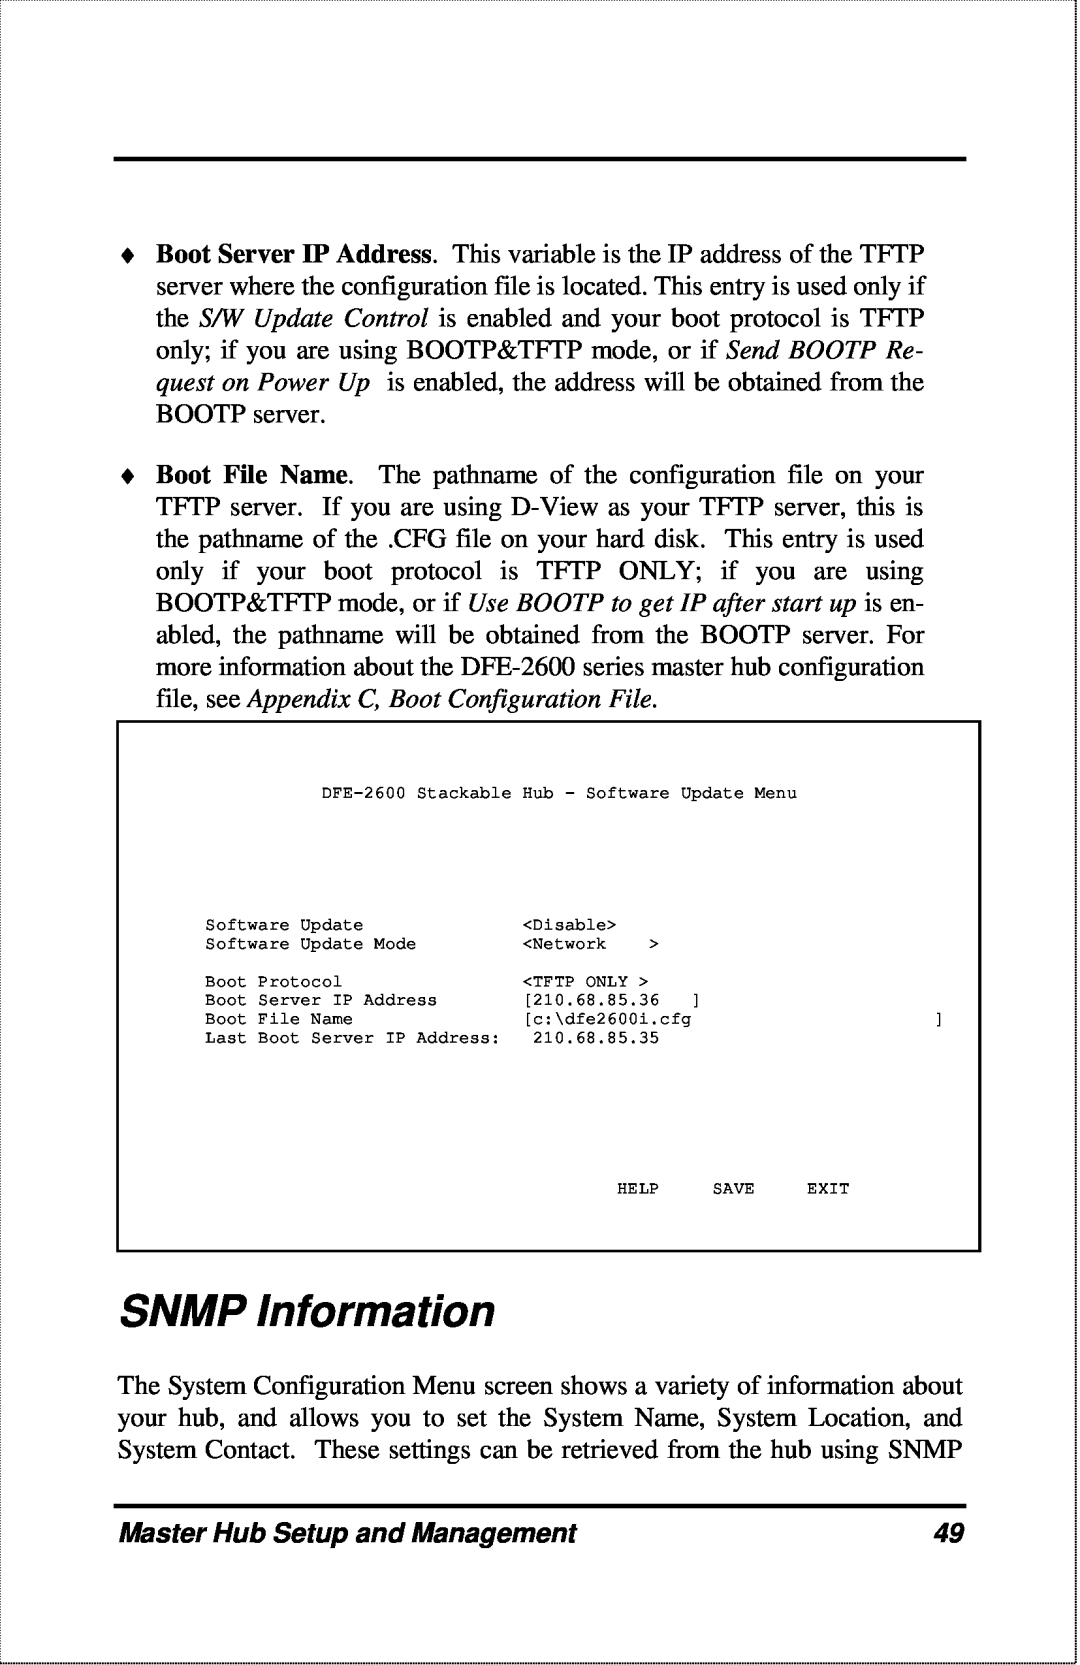 D-Link DFE-2600 manual SNMP Information, Master Hub Setup and Management 